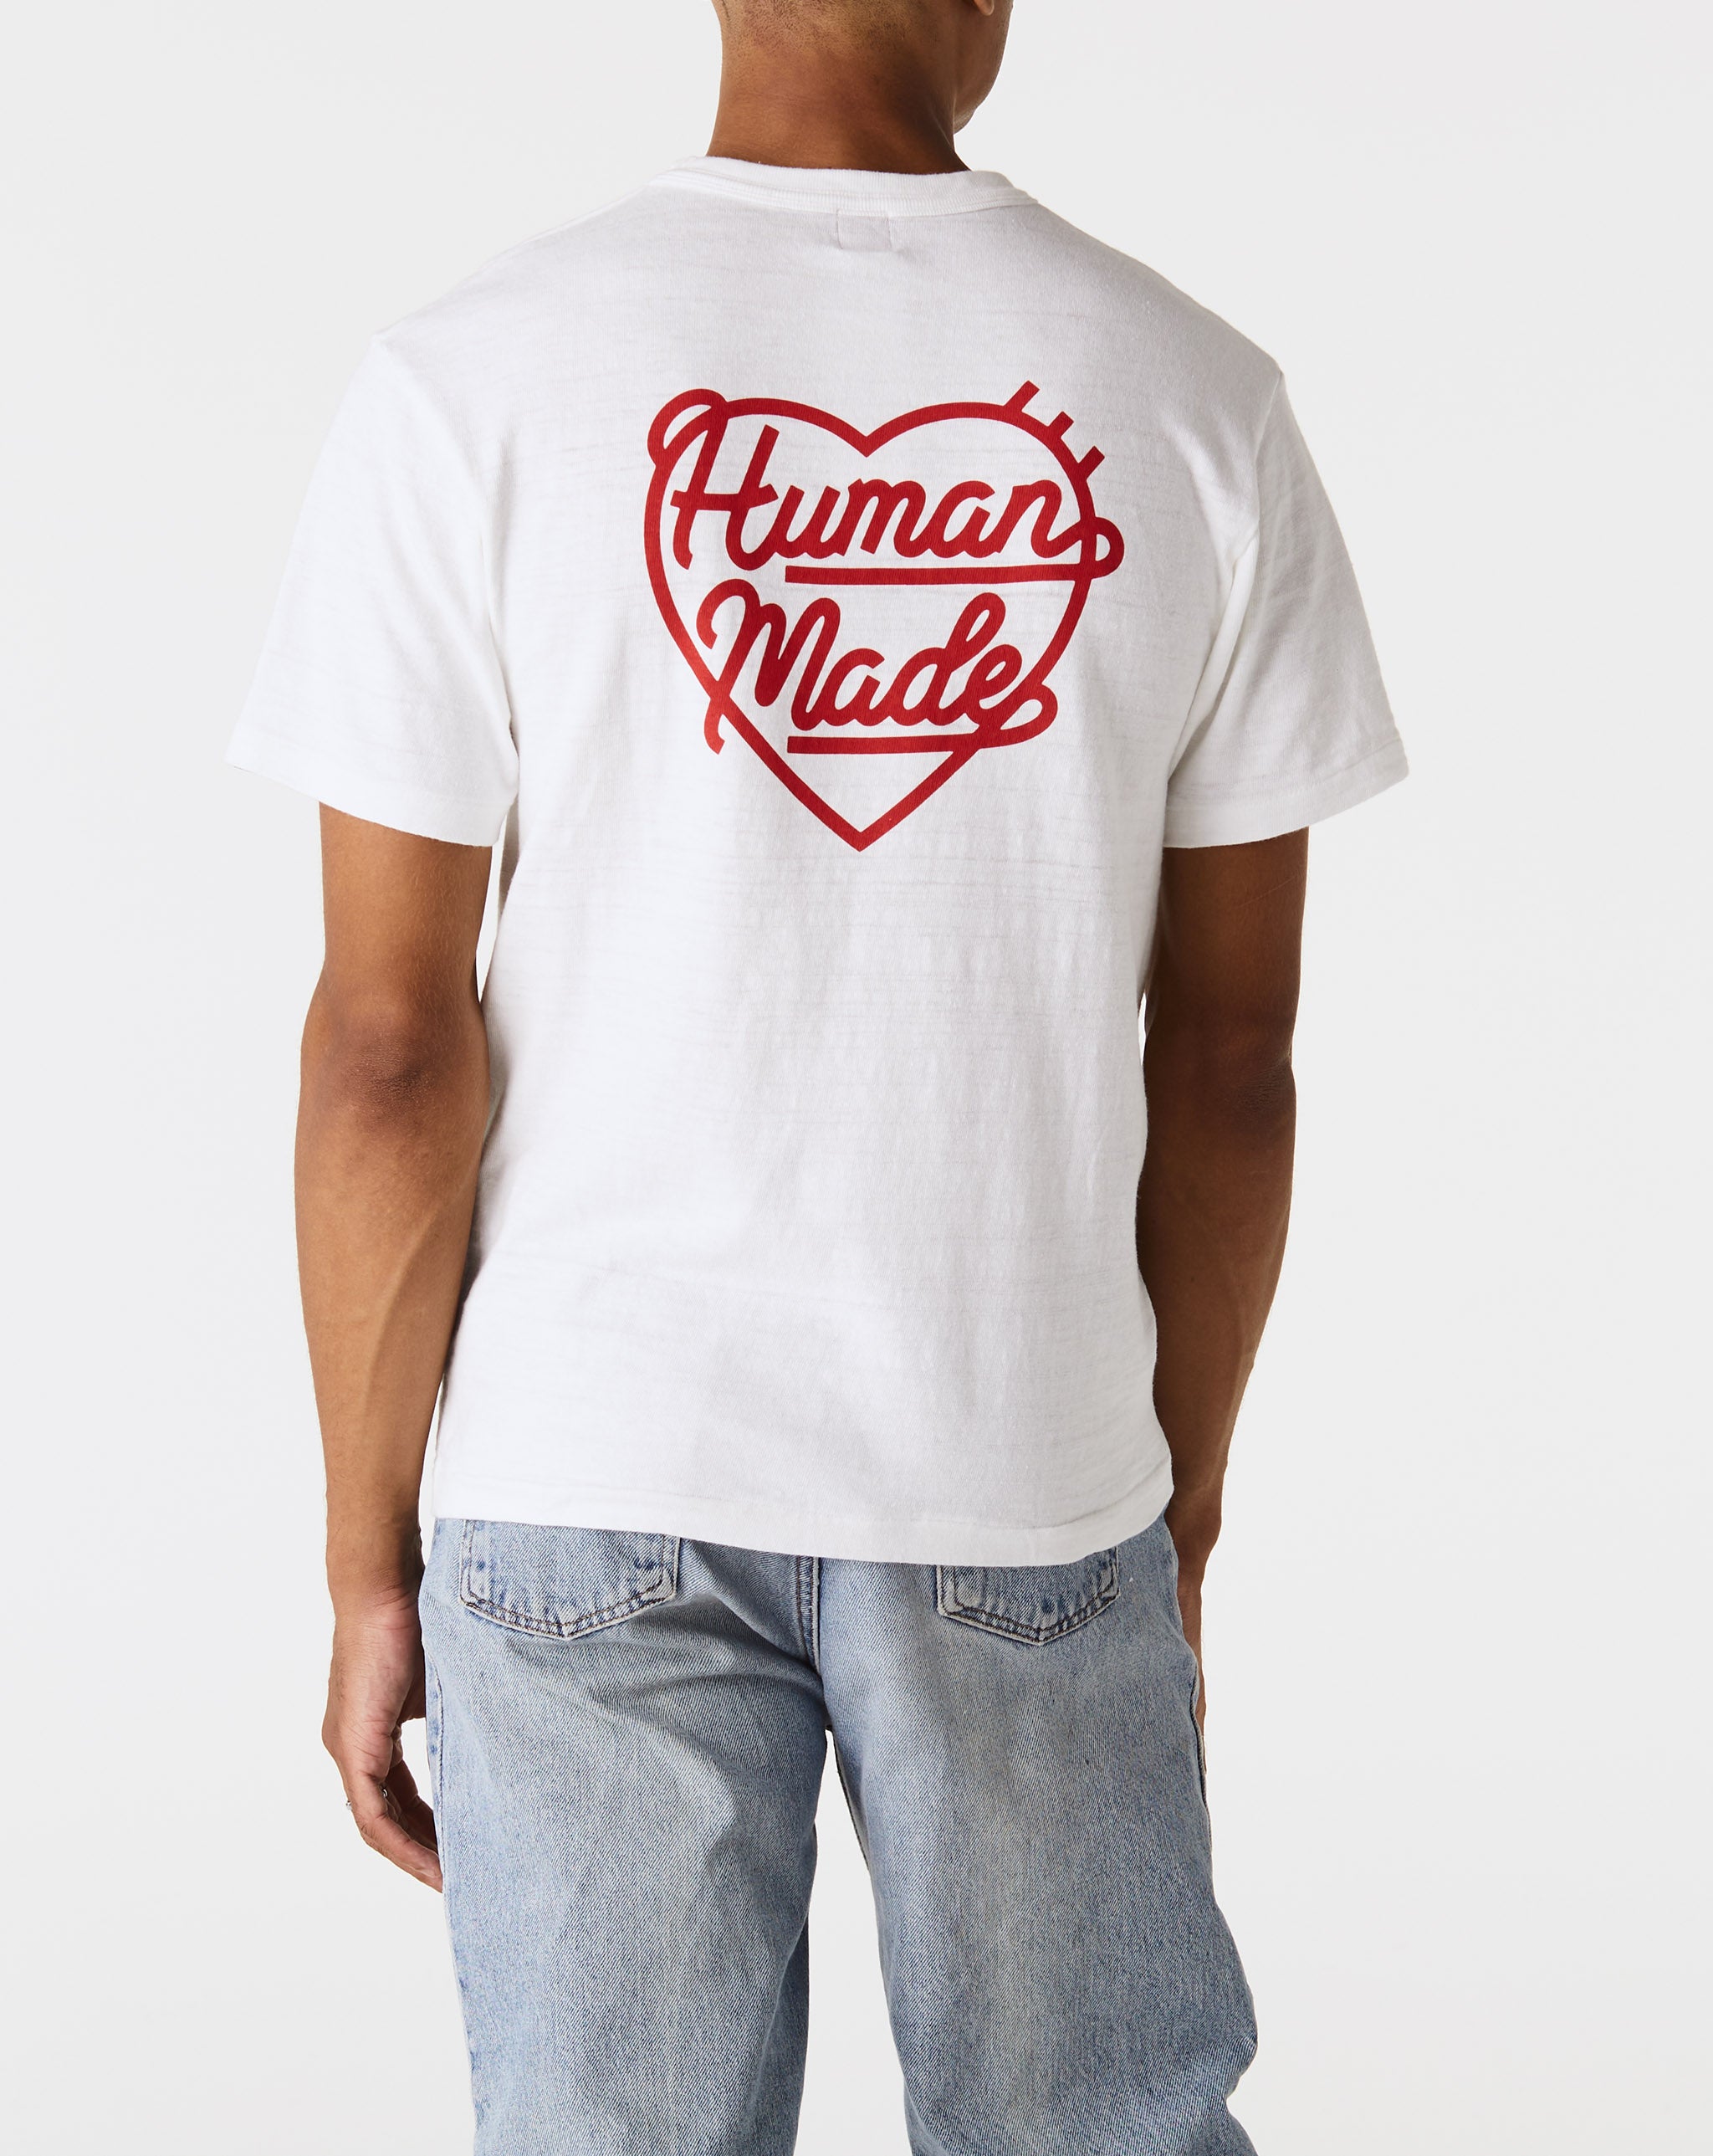 Human Made Heart Badge T-Shirt  - XHIBITION